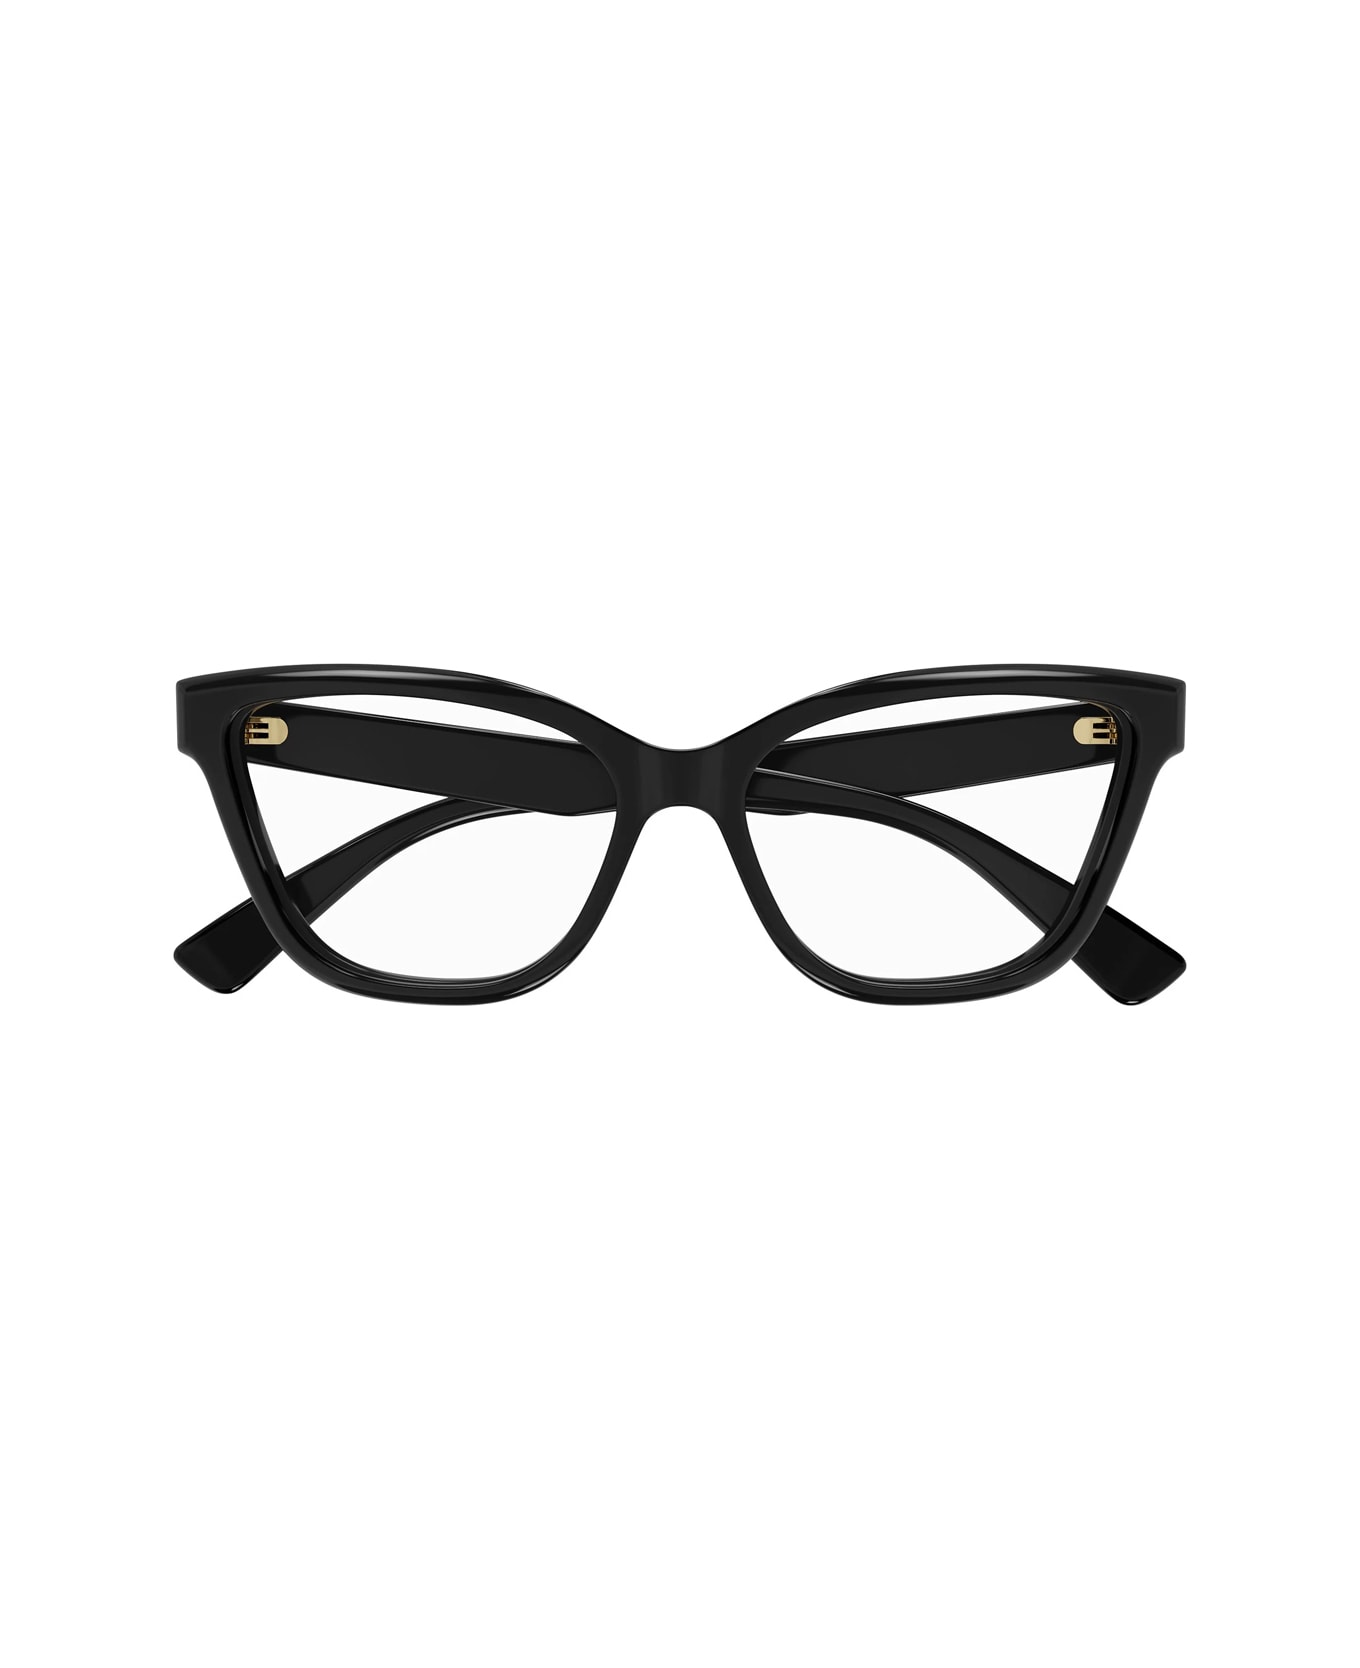 Gucci Eyewear Gucci Gg1589o Linea Lettering 001 Glasses - Nero アイウェア